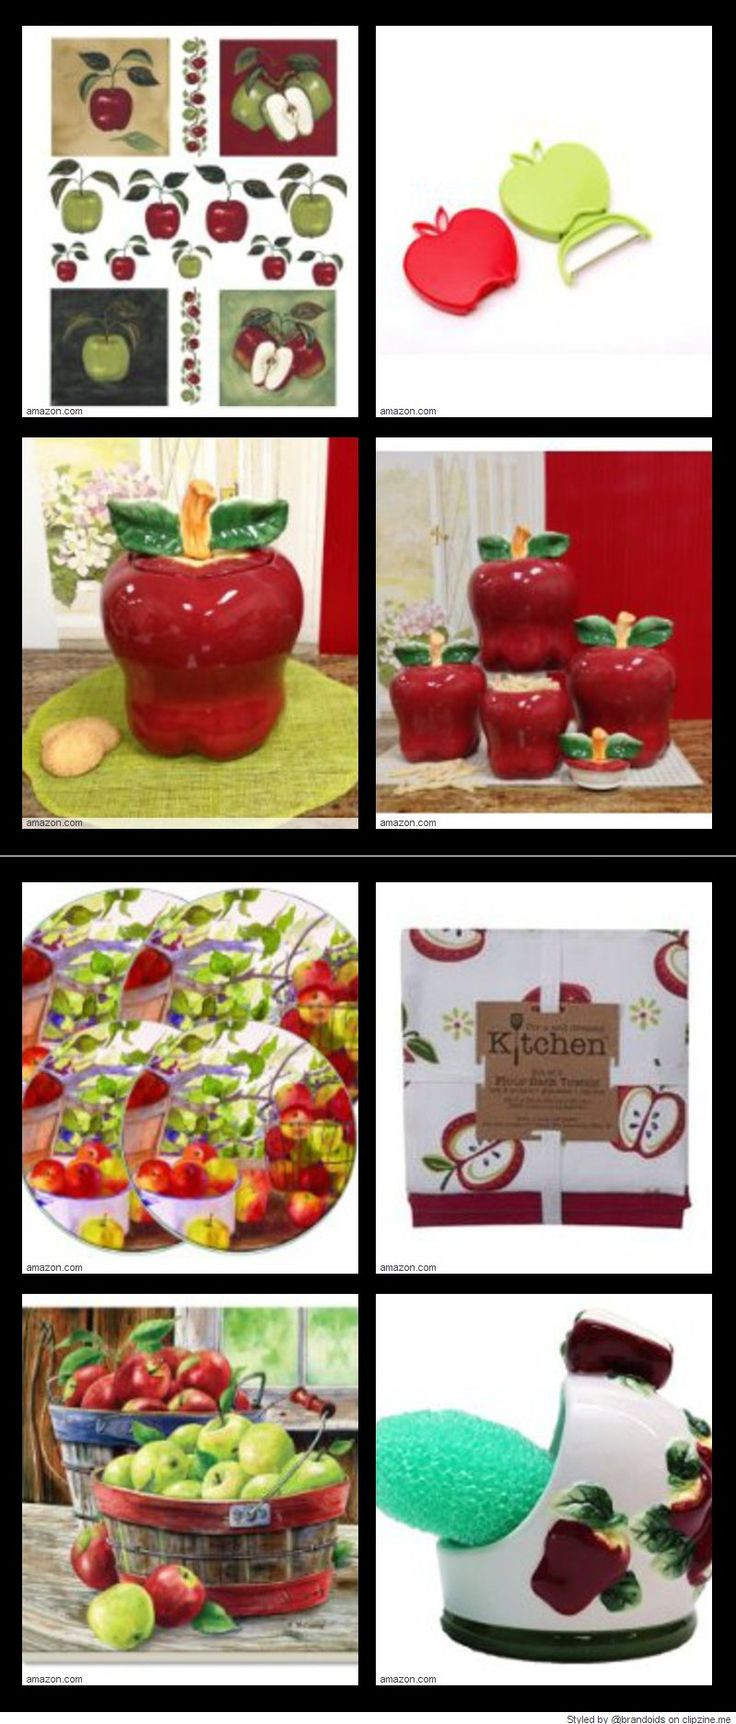 Best ideas about Apple Kitchen Decor Ideas
. Save or Pin 25 best ideas about Apple kitchen decor on Pinterest Now.